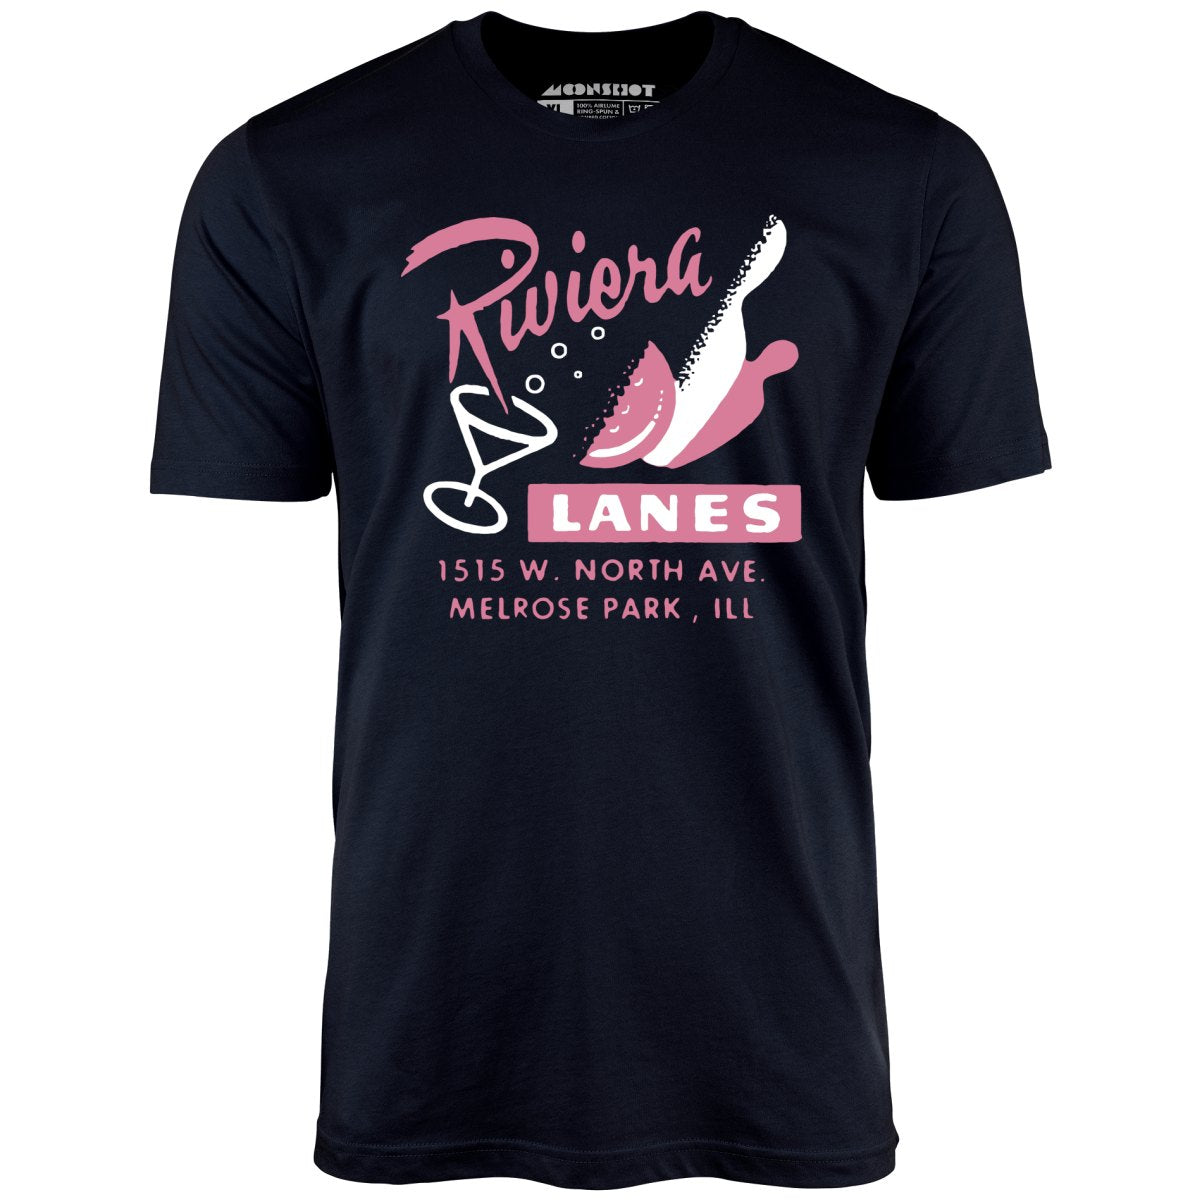 Riviera Lanes - Melrose Park, IL - Vintage Bowling Alley - Unisex T-Shirt